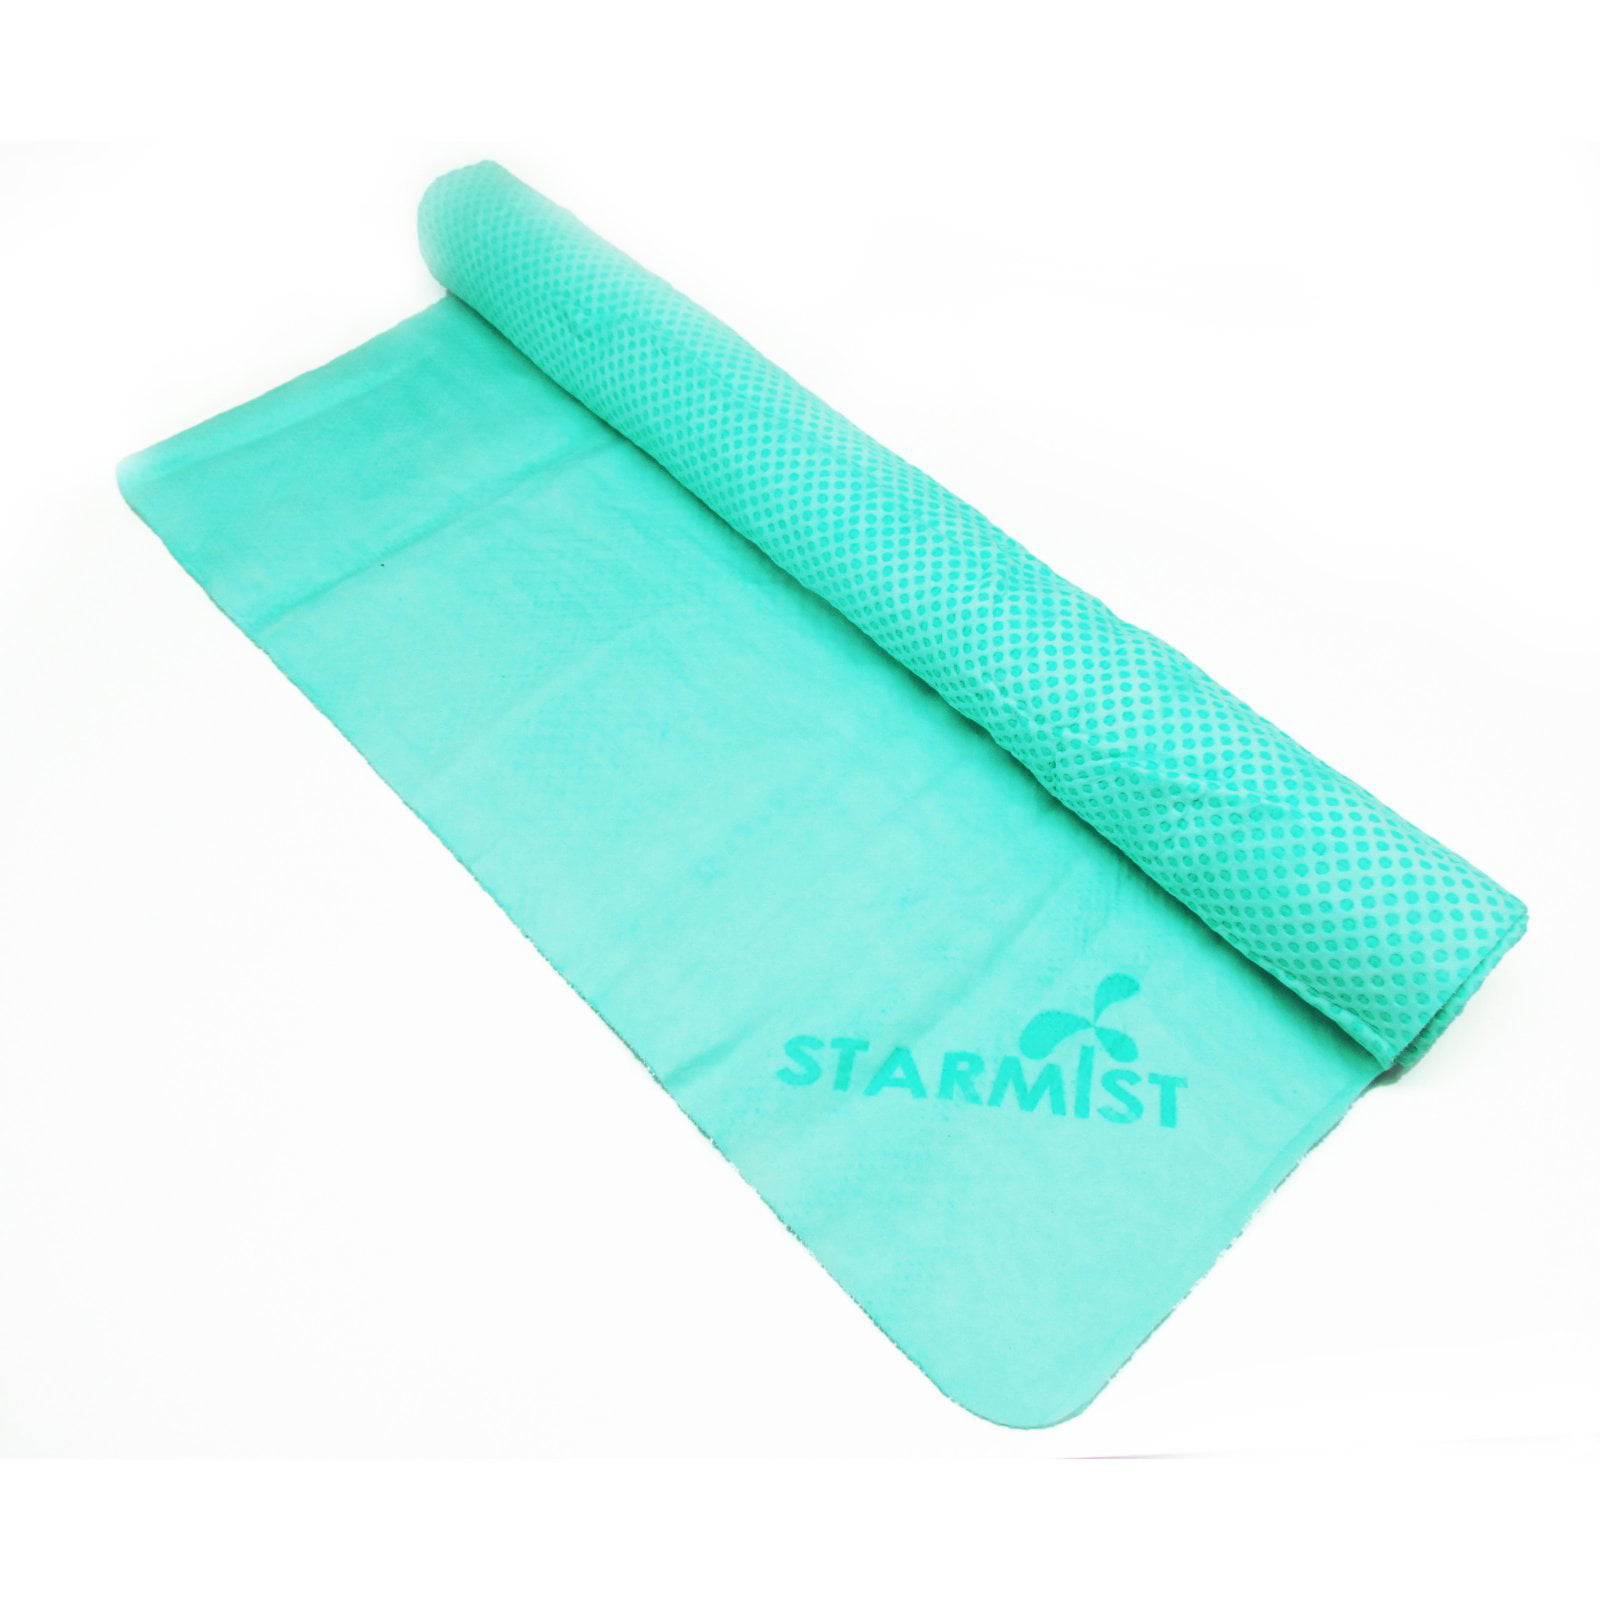 Starmist Gym/Training/Fitness Cooling Towel 32” x 16” 